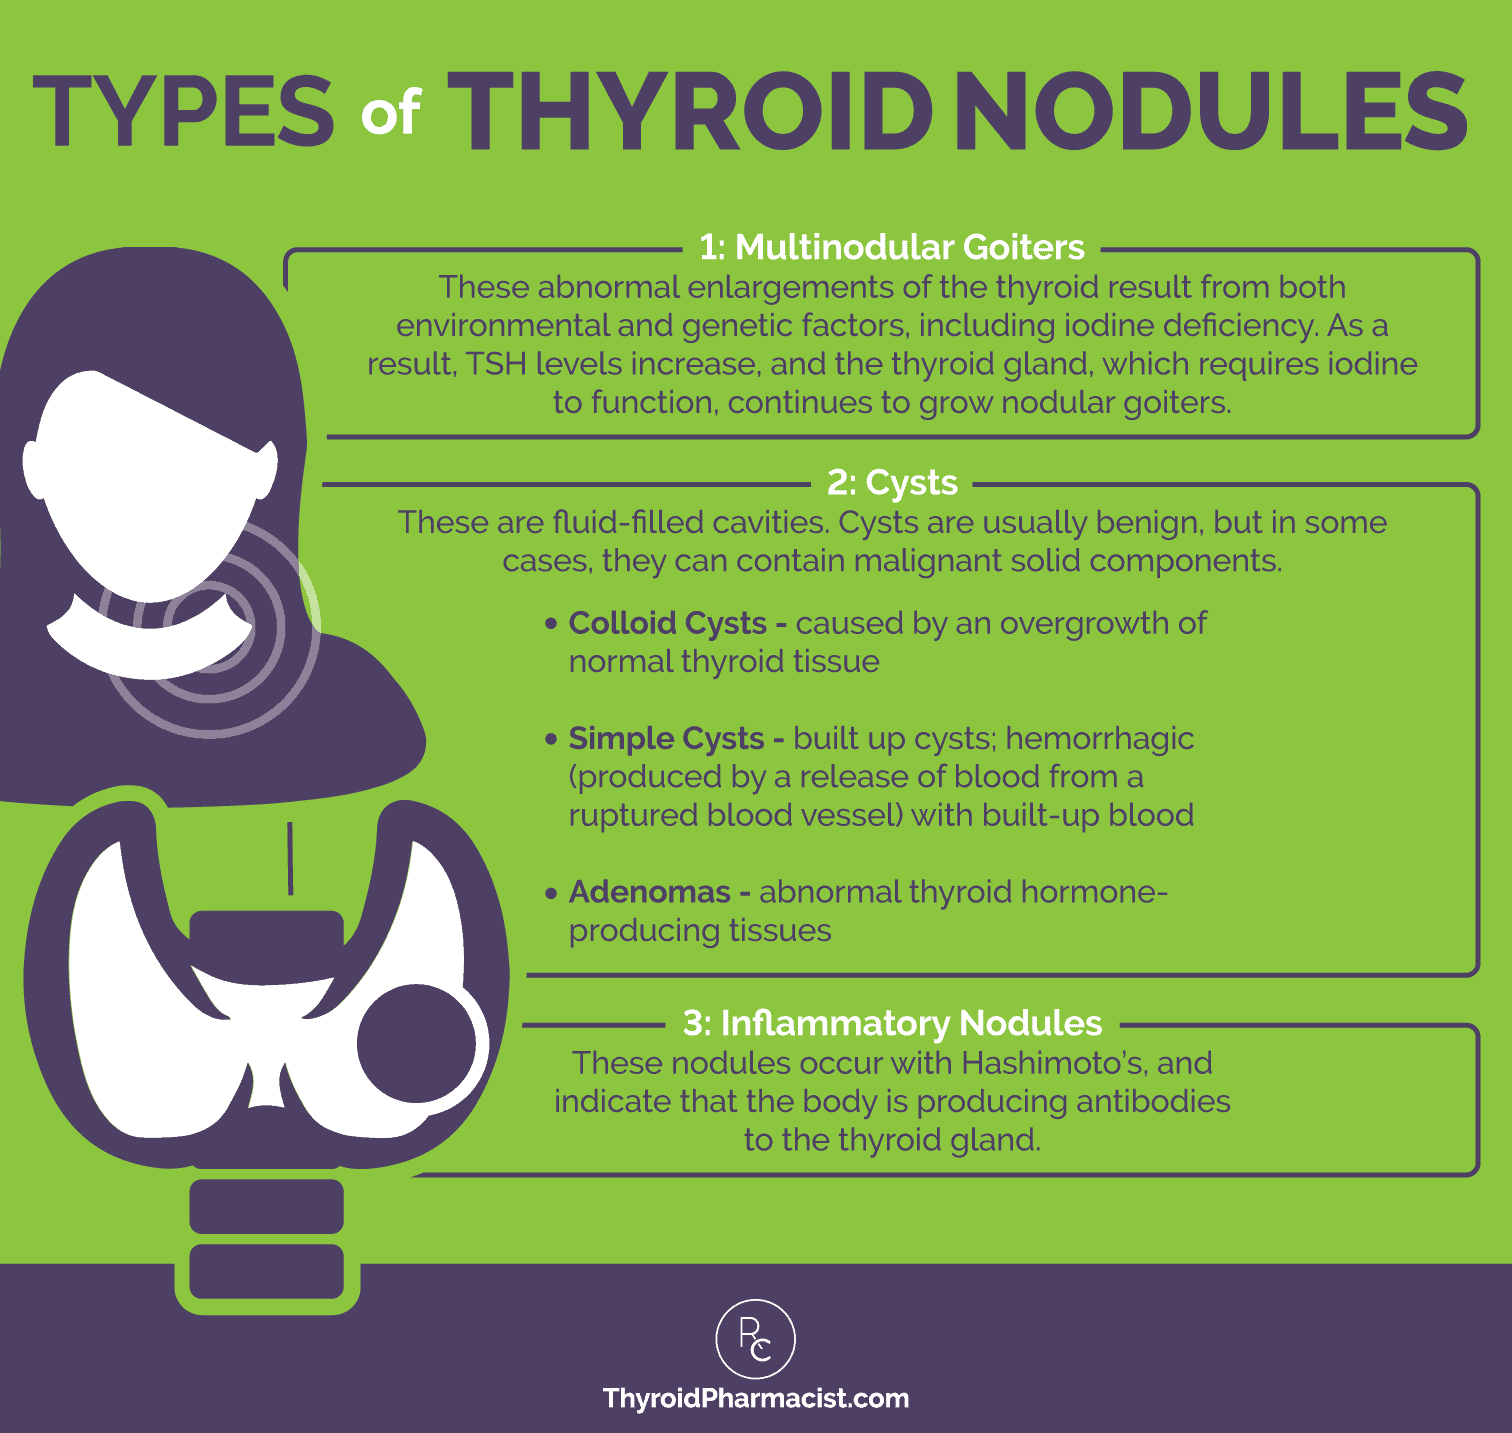 How to Shrink Thyroid Nodules - Dr. Izabella Wentz